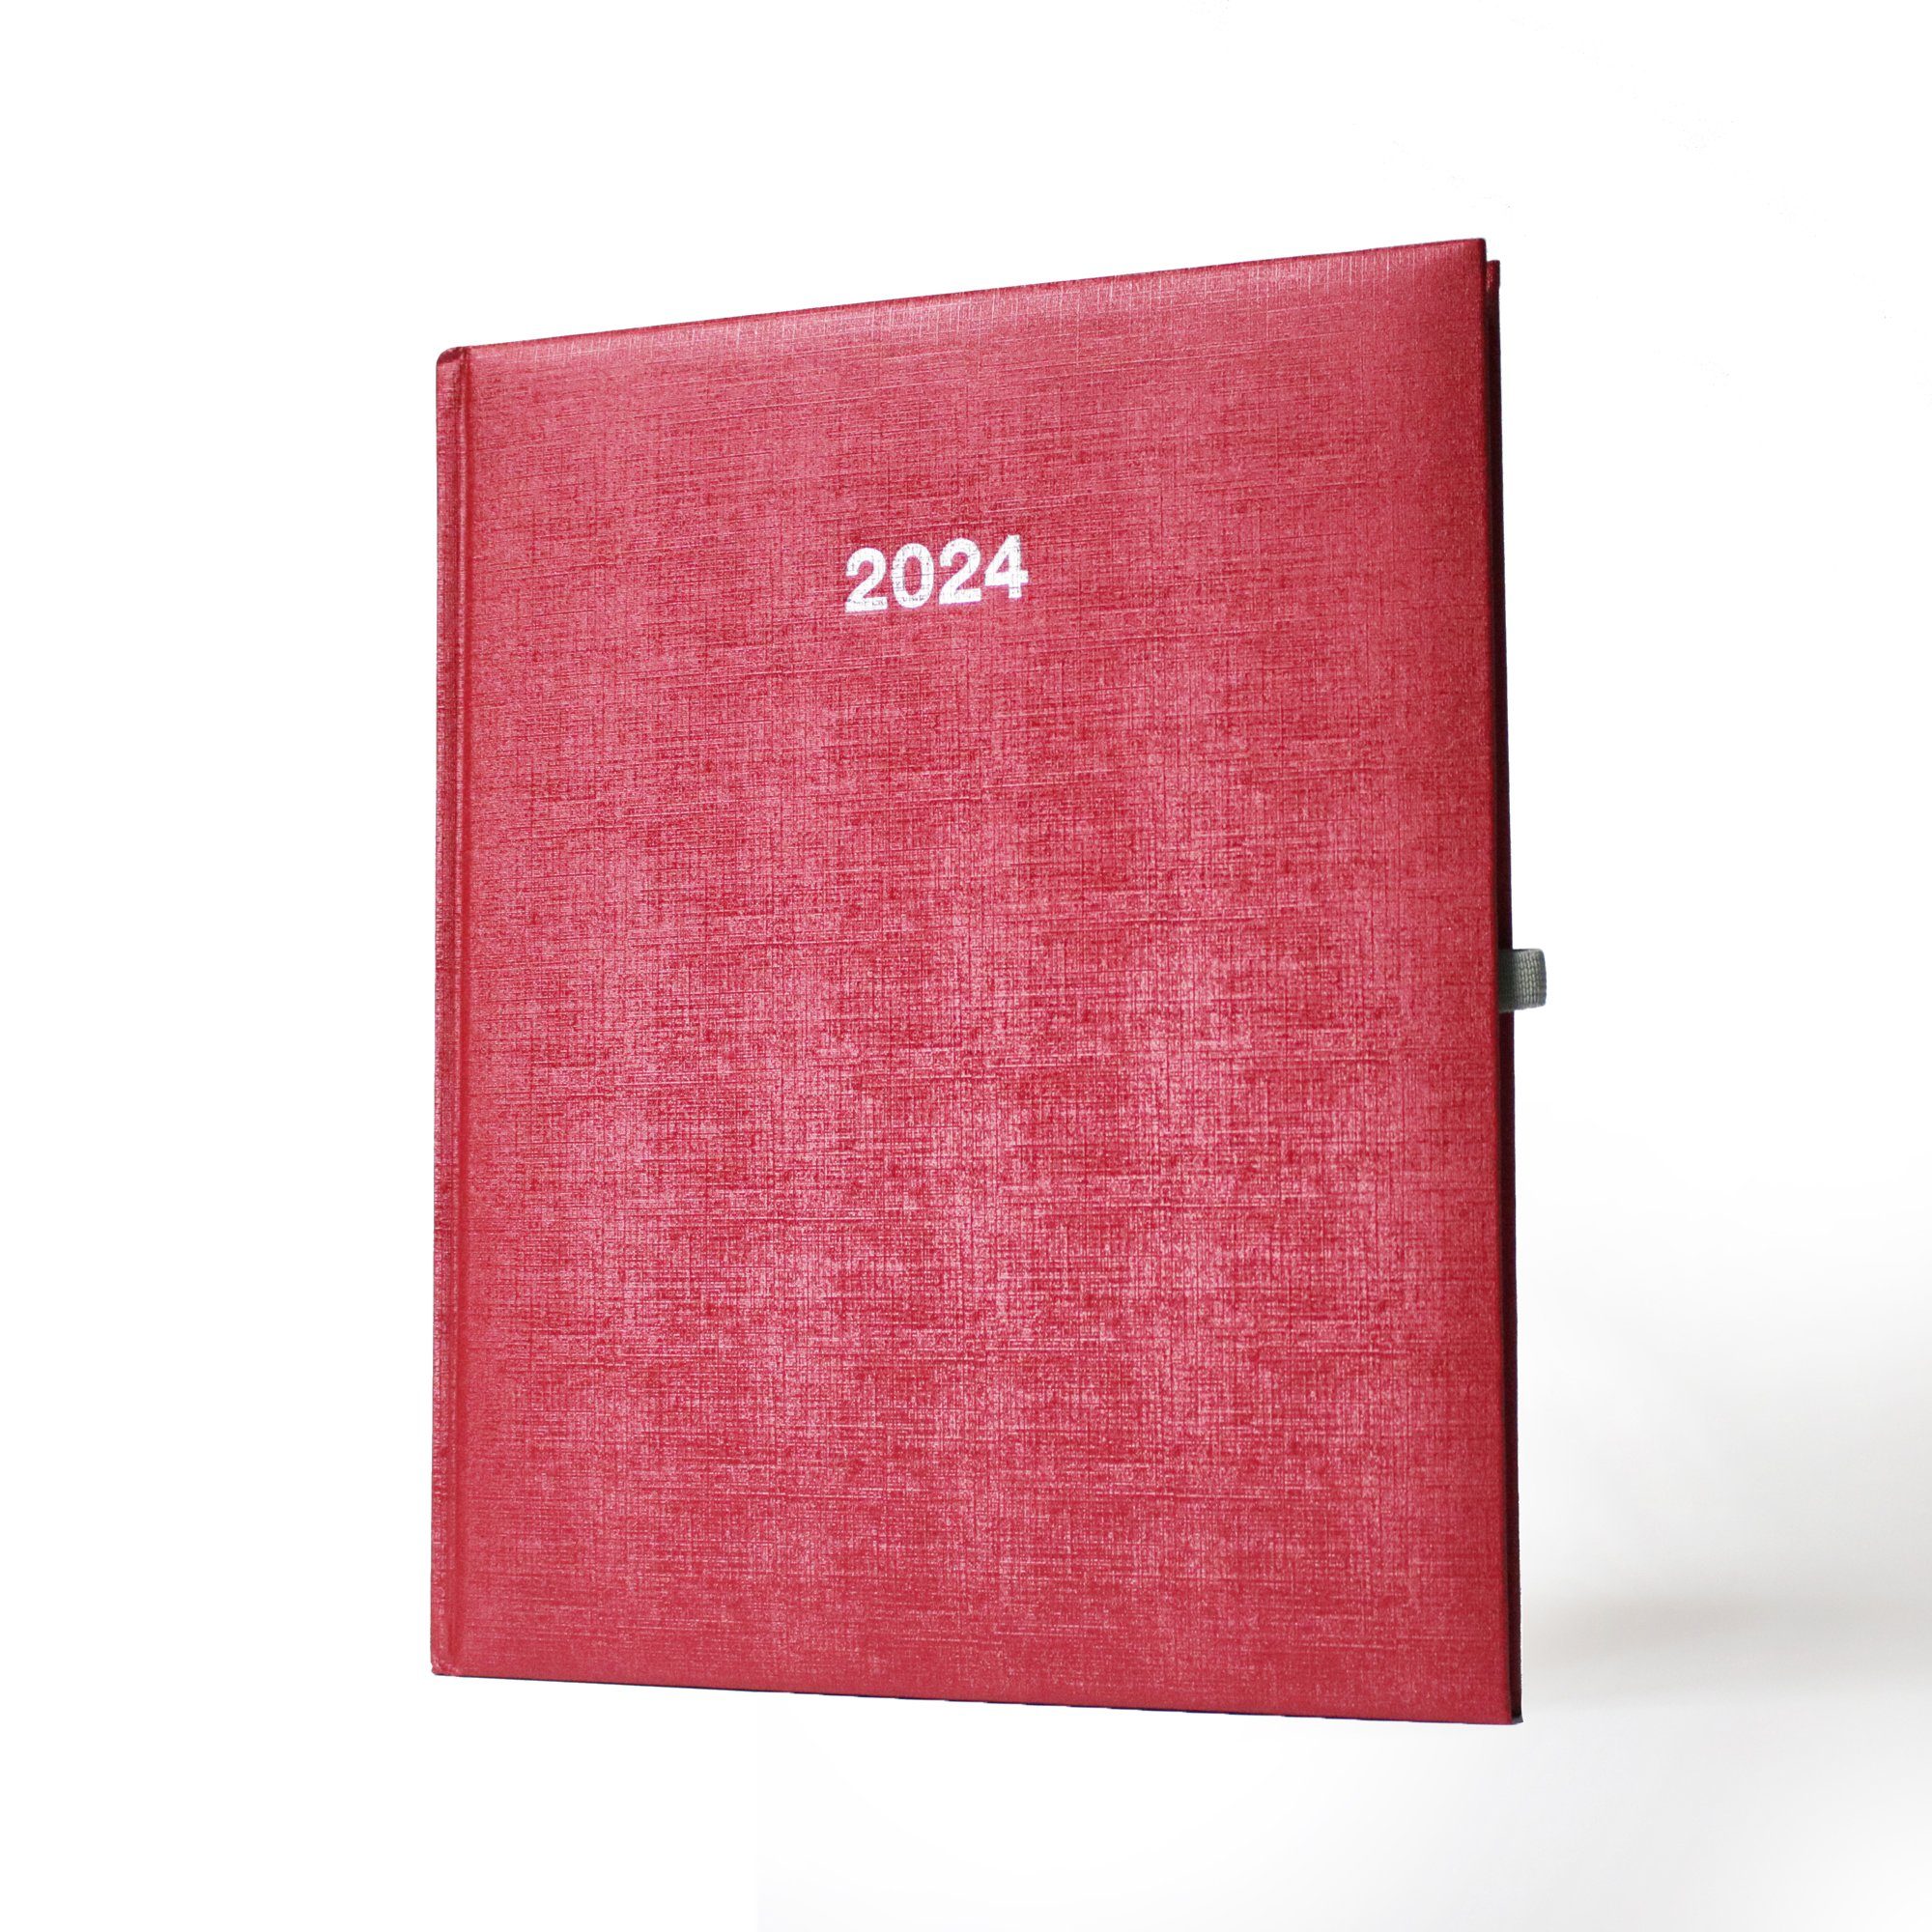 ADINA Buchkalender 2024 ADINA Buchkalender A5+ rot-metallic 21x26cm 1 Woche auf 2 Seiten